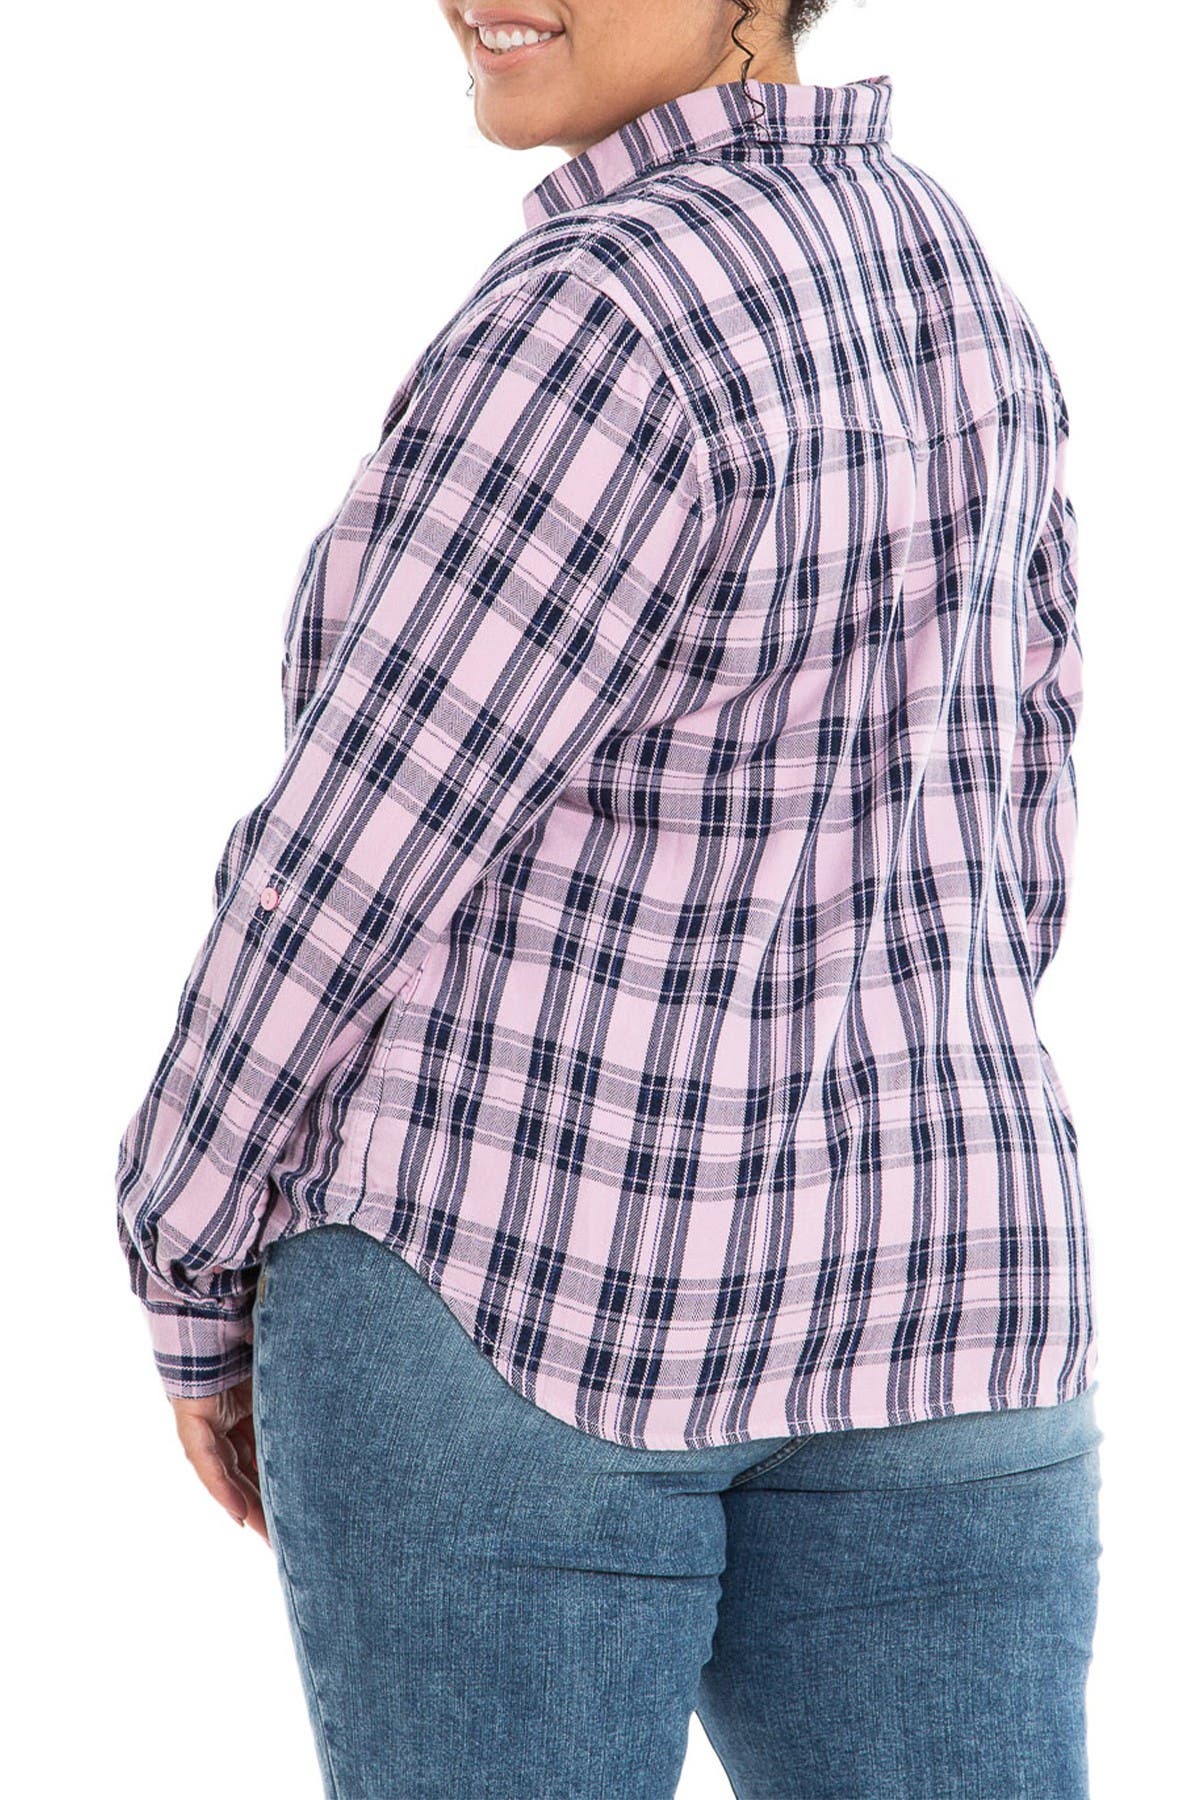 Slink Jeans Plaid Western Shirt In Medium Purple5